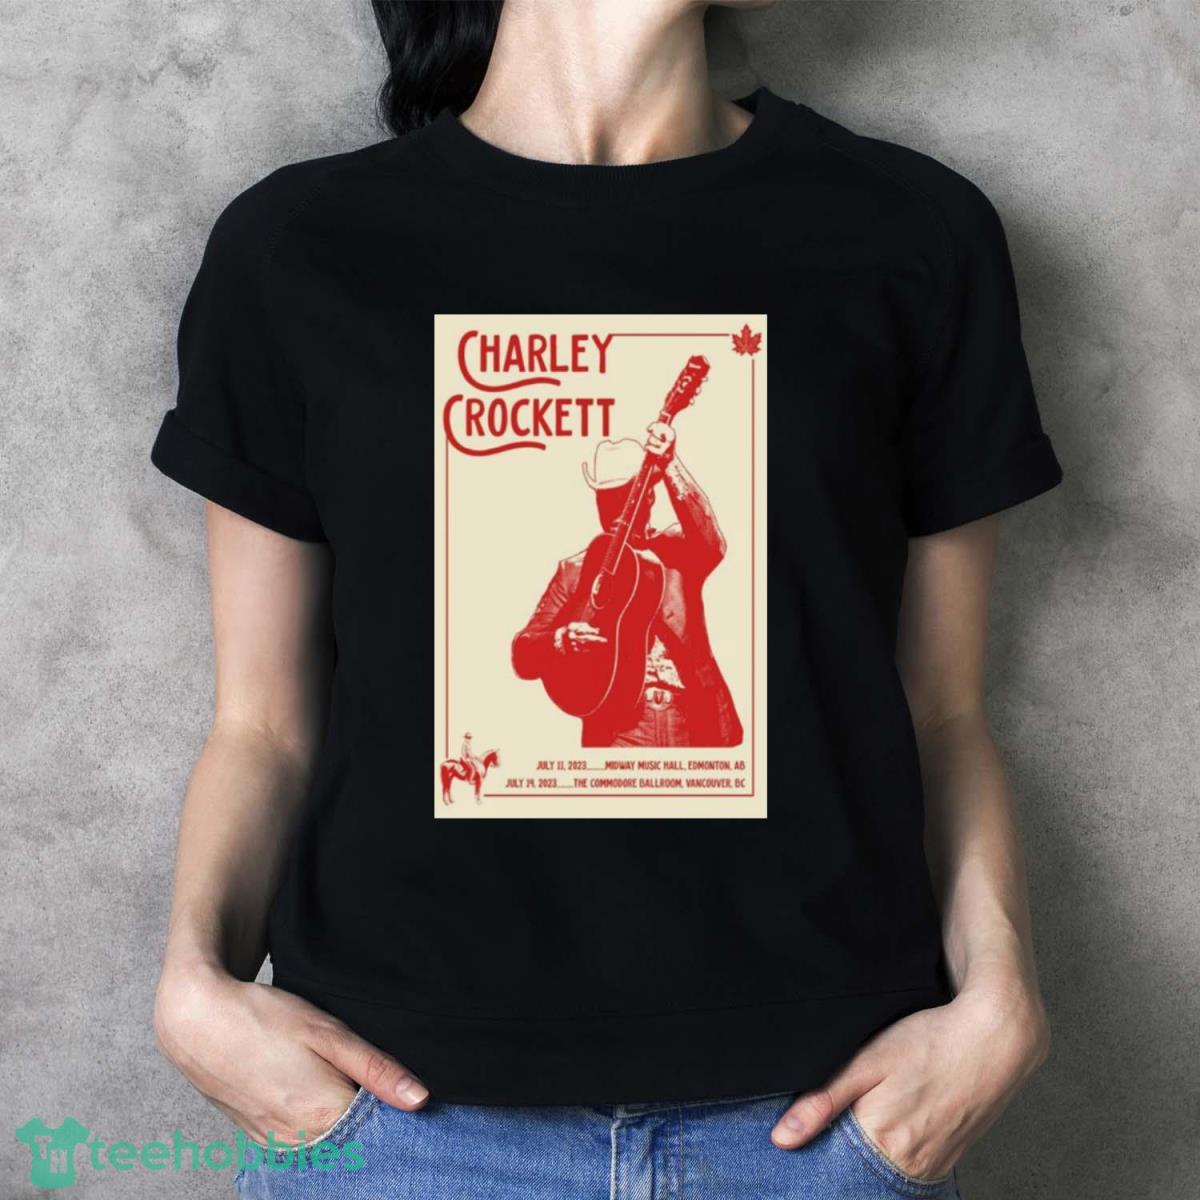 2023 Charley Crockett Edmonton AB Event Tour Poster Shirt - Ladies T-Shirt